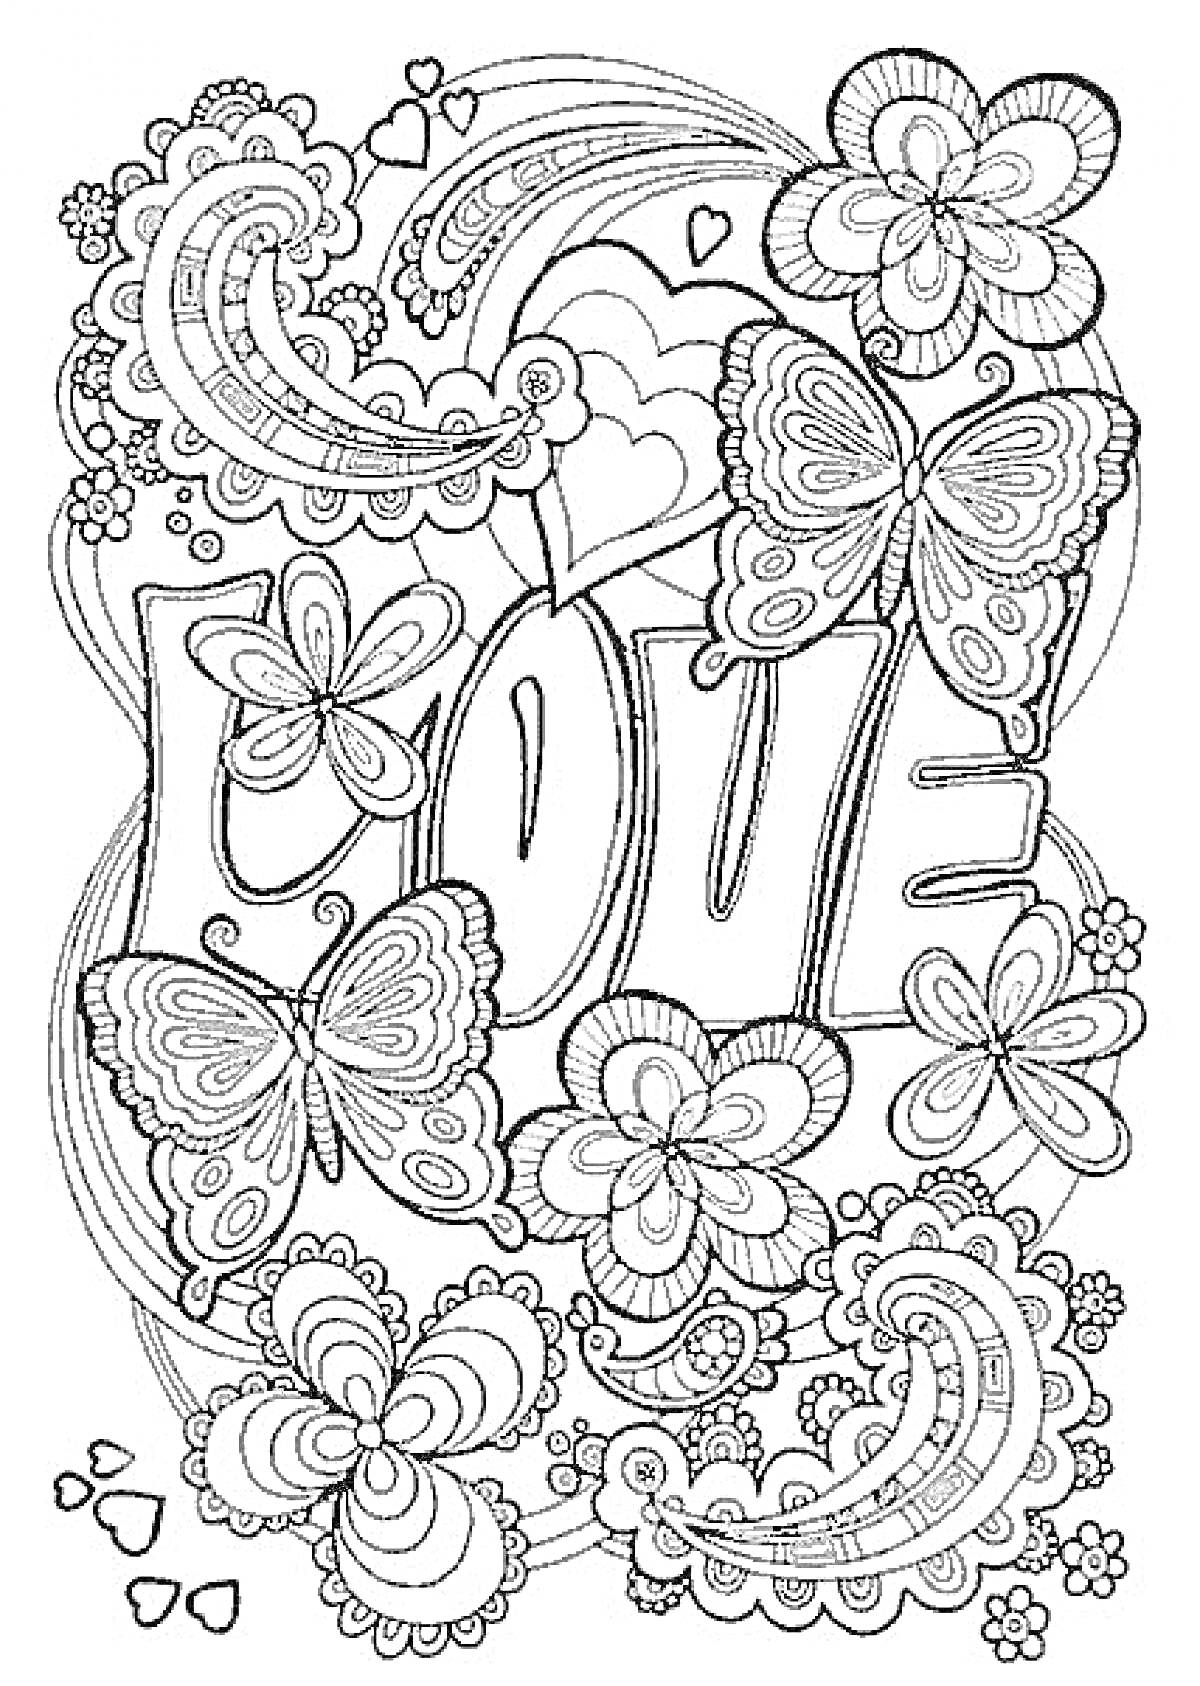 Раскраска Love с бабочками, цветами и узорами